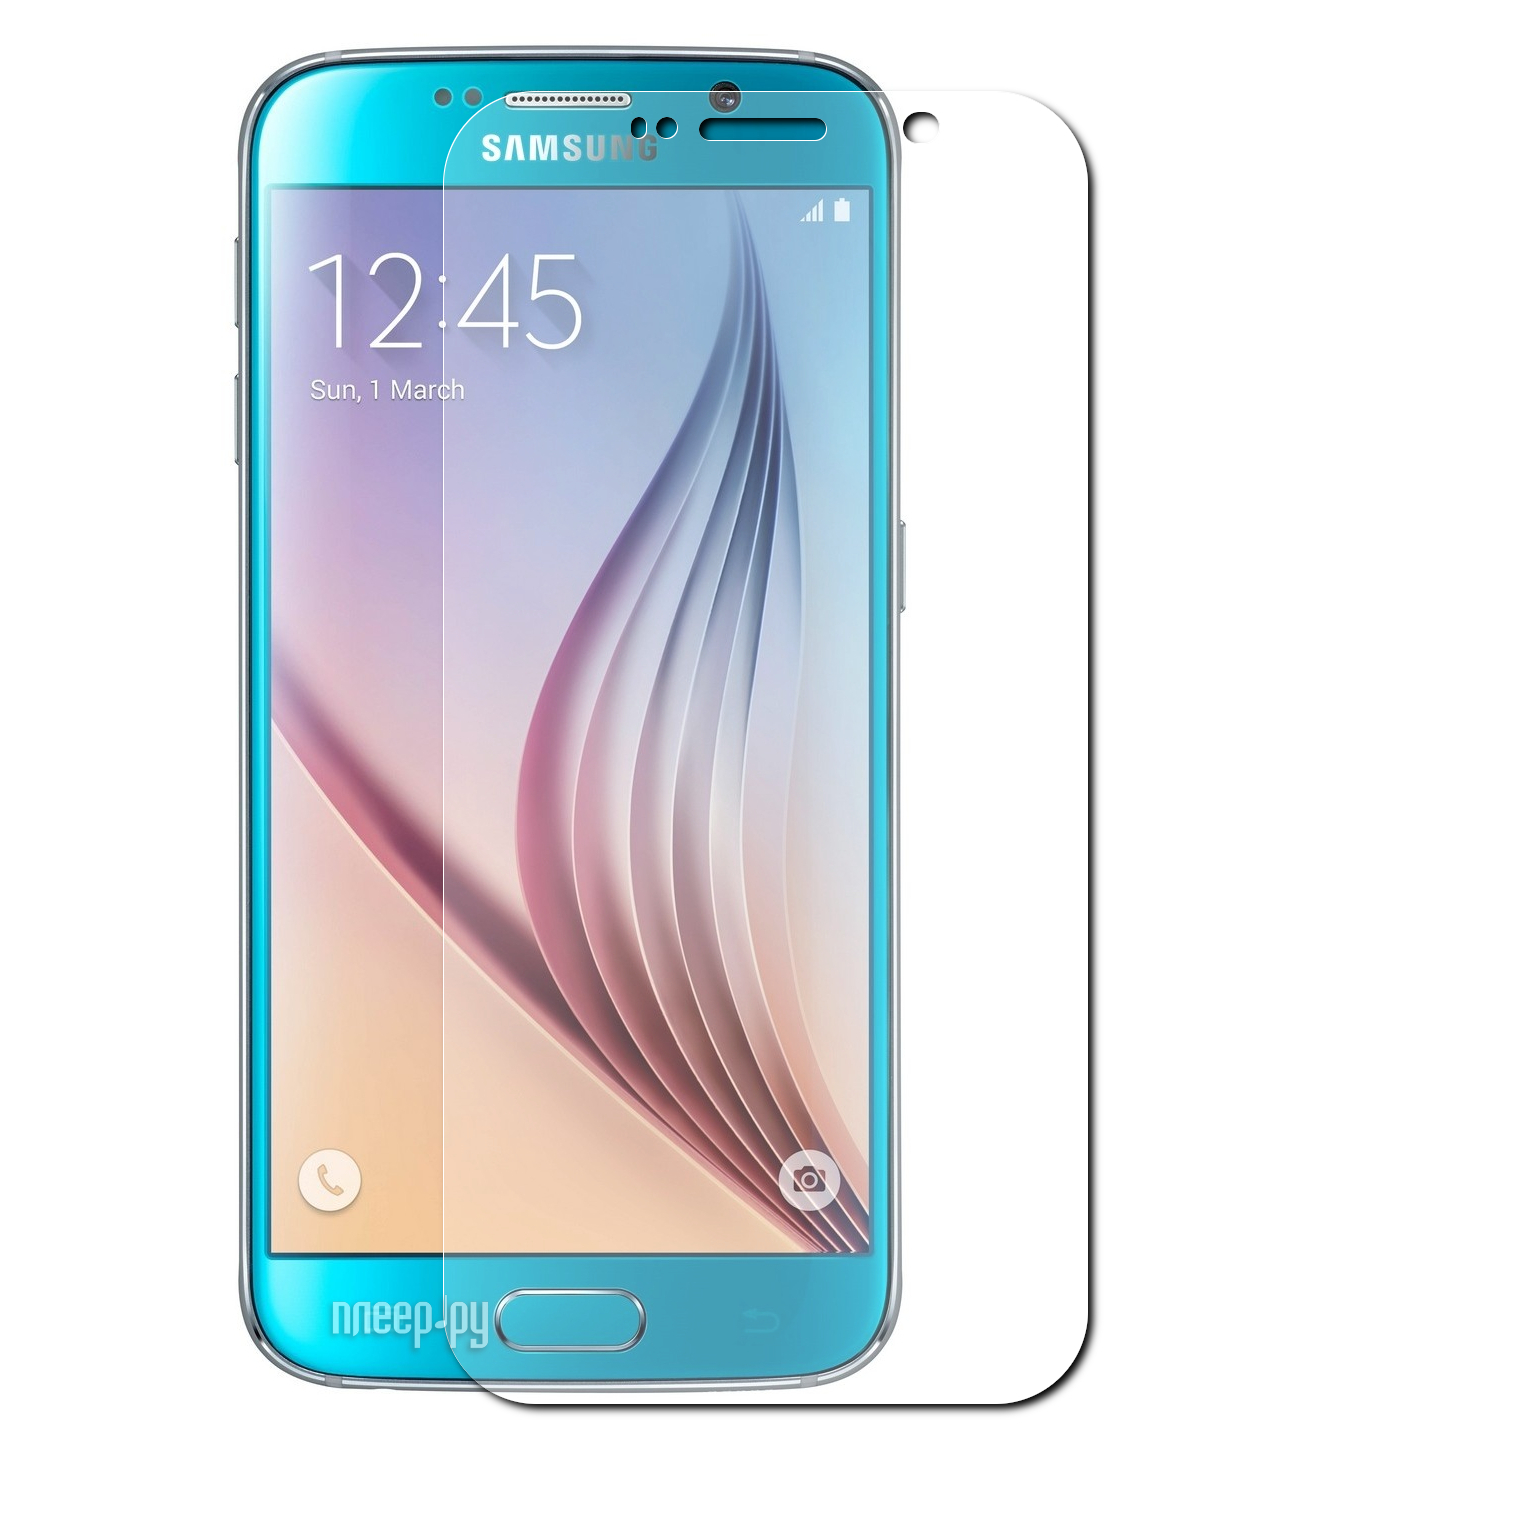    Samsung G920F Galaxy S6 Solomon 